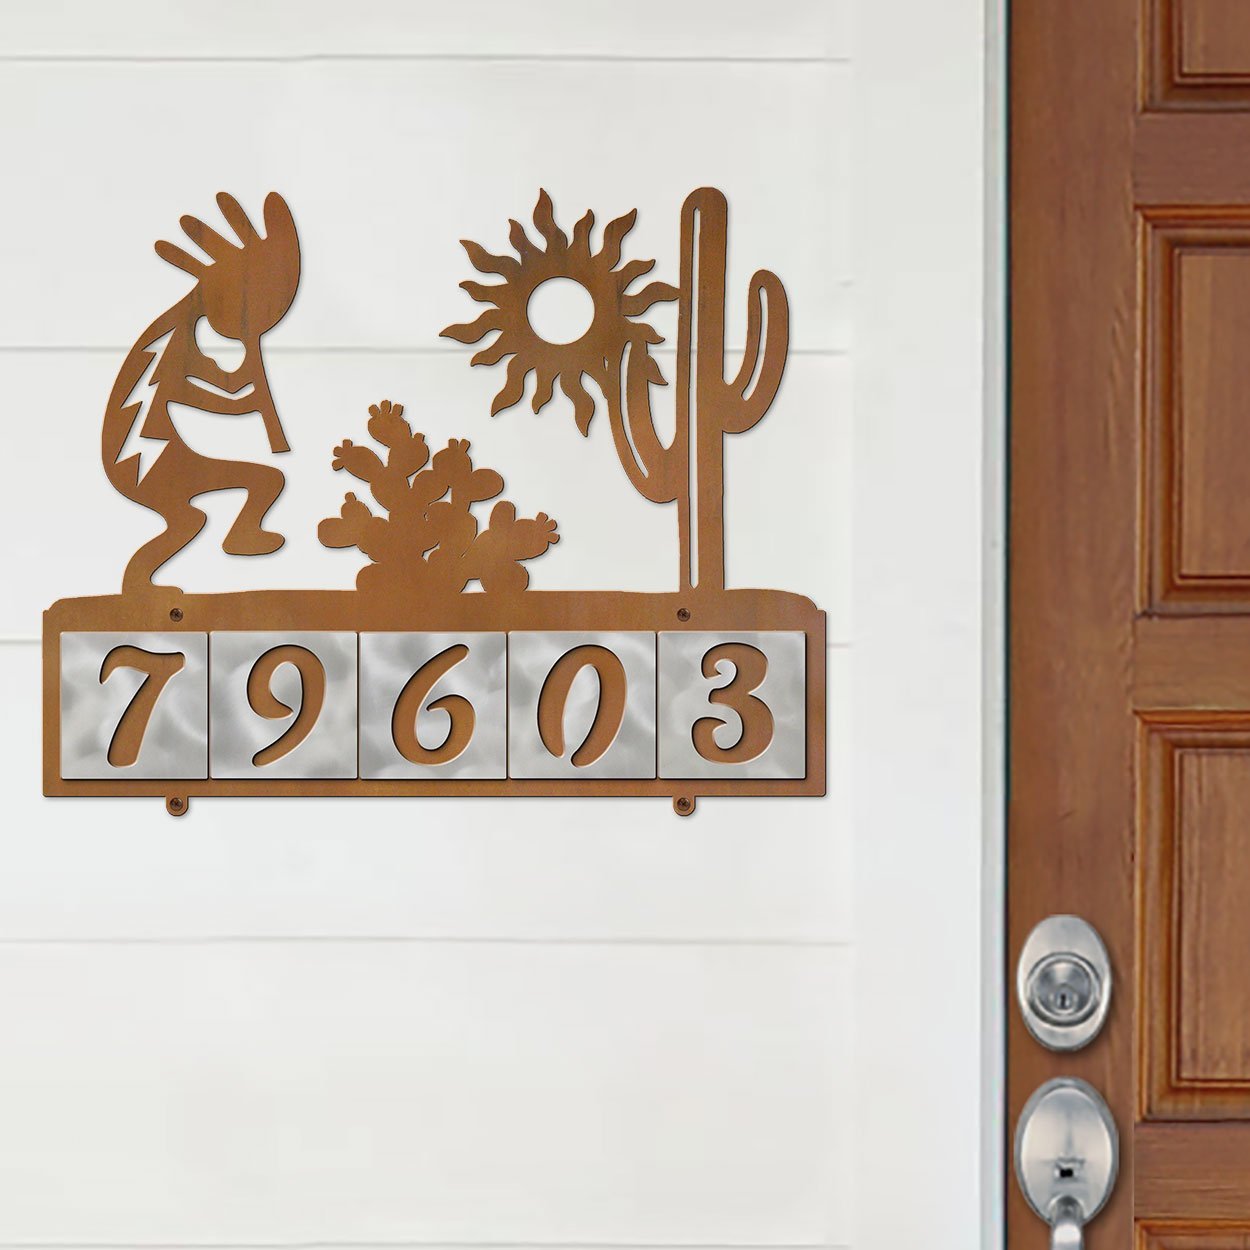 609155 - XL Kokopelli Desert Scene Design 5-Digit Horizontal 6in Tile Outdoor House Numbers